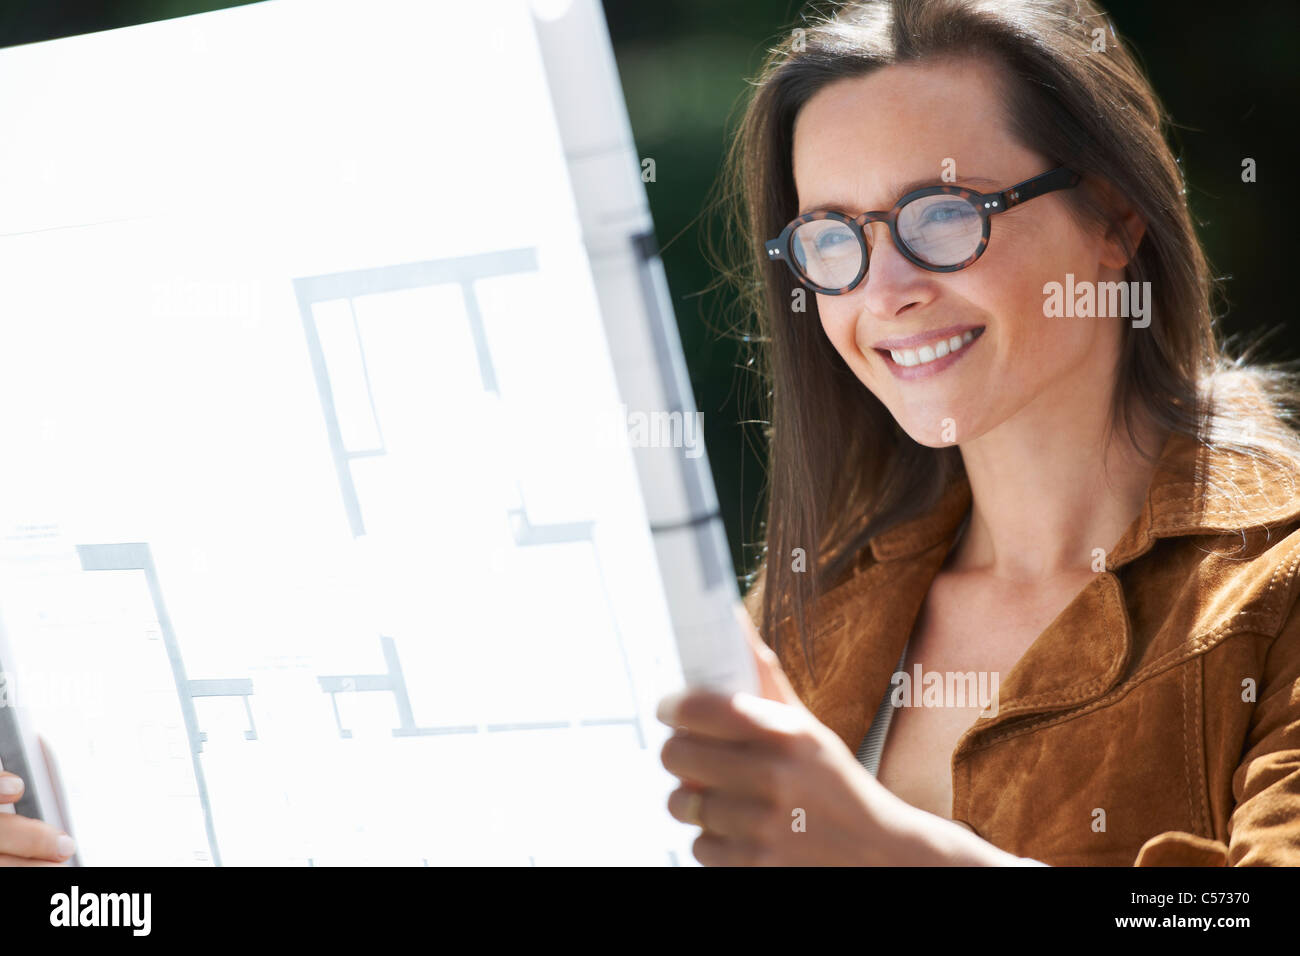 Woman reading blueprints outdoors Stock Photo